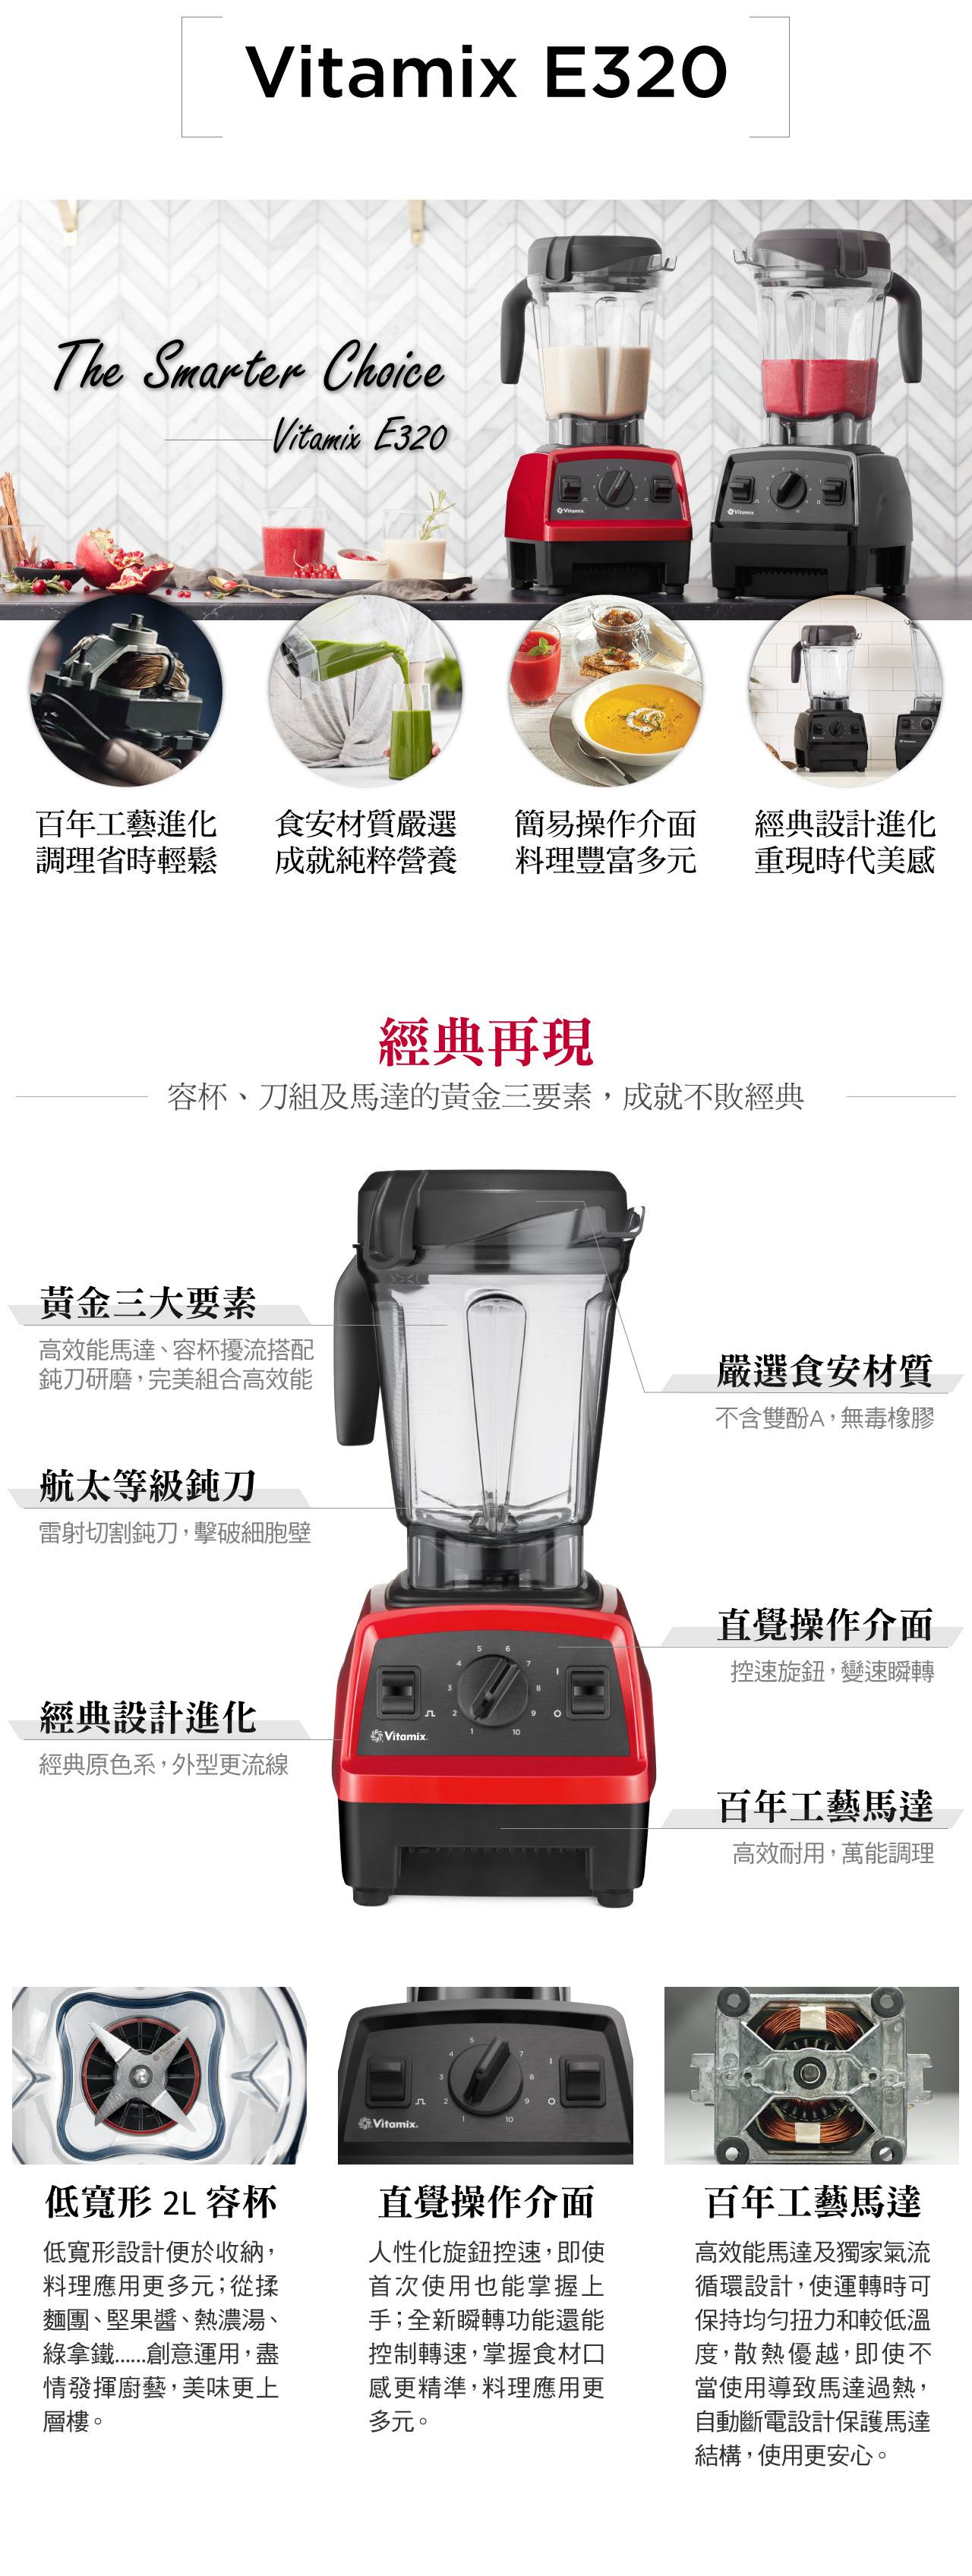 Vitamix-E320調理機-產品特色與經典再現